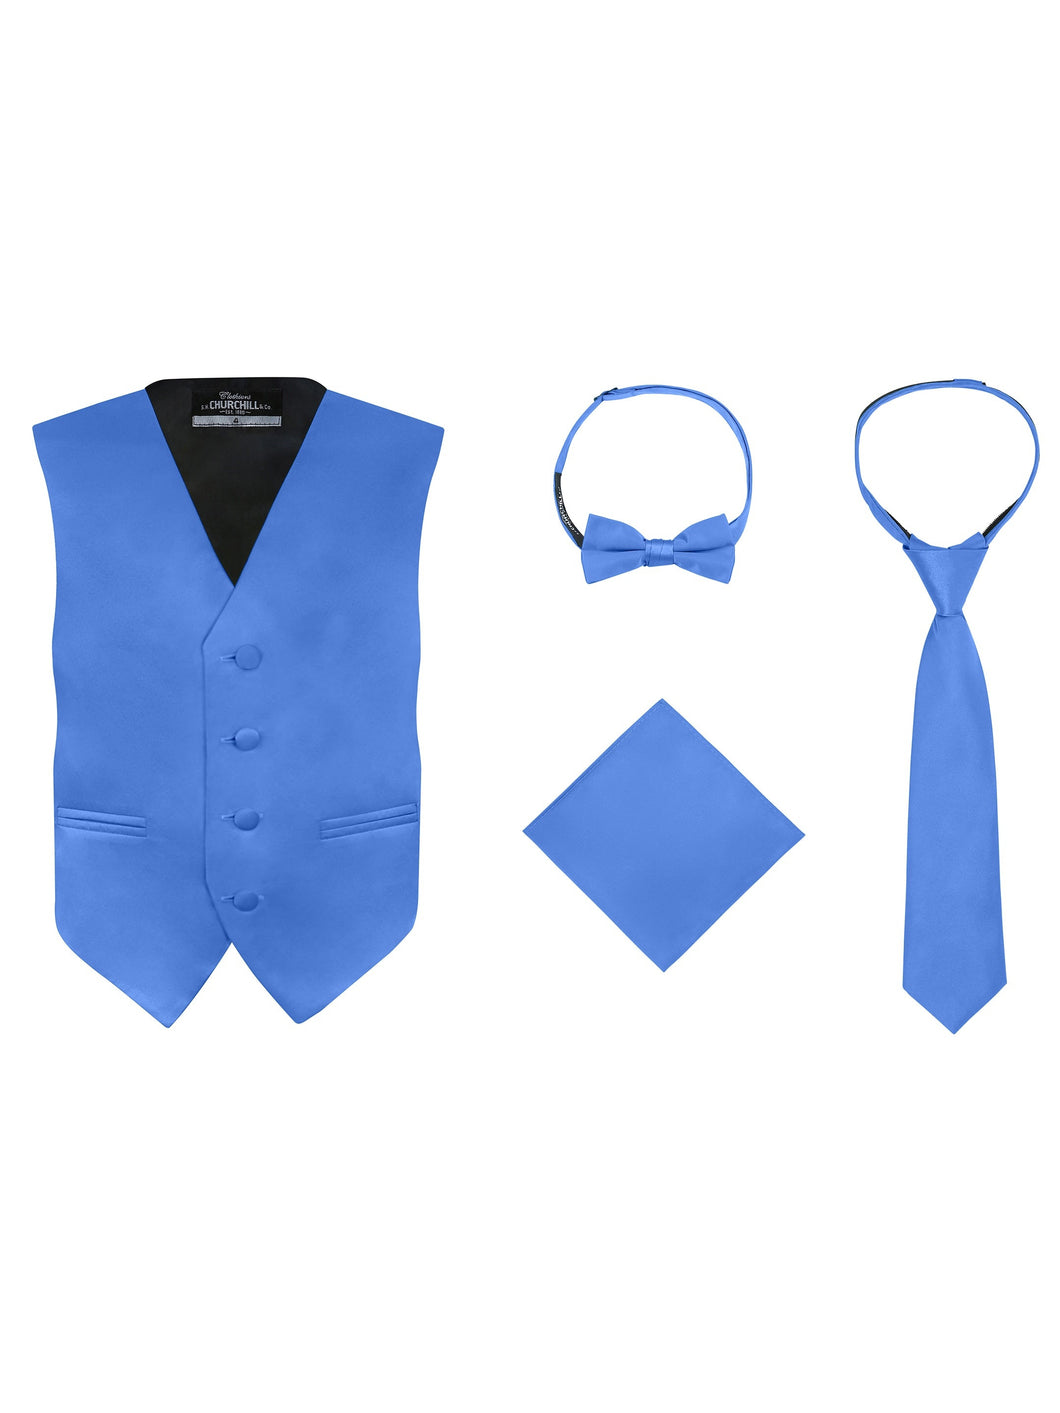 Boy's 4 Piece Vest Set, with Bow Tie, Neck Tie & Pocket Hankie